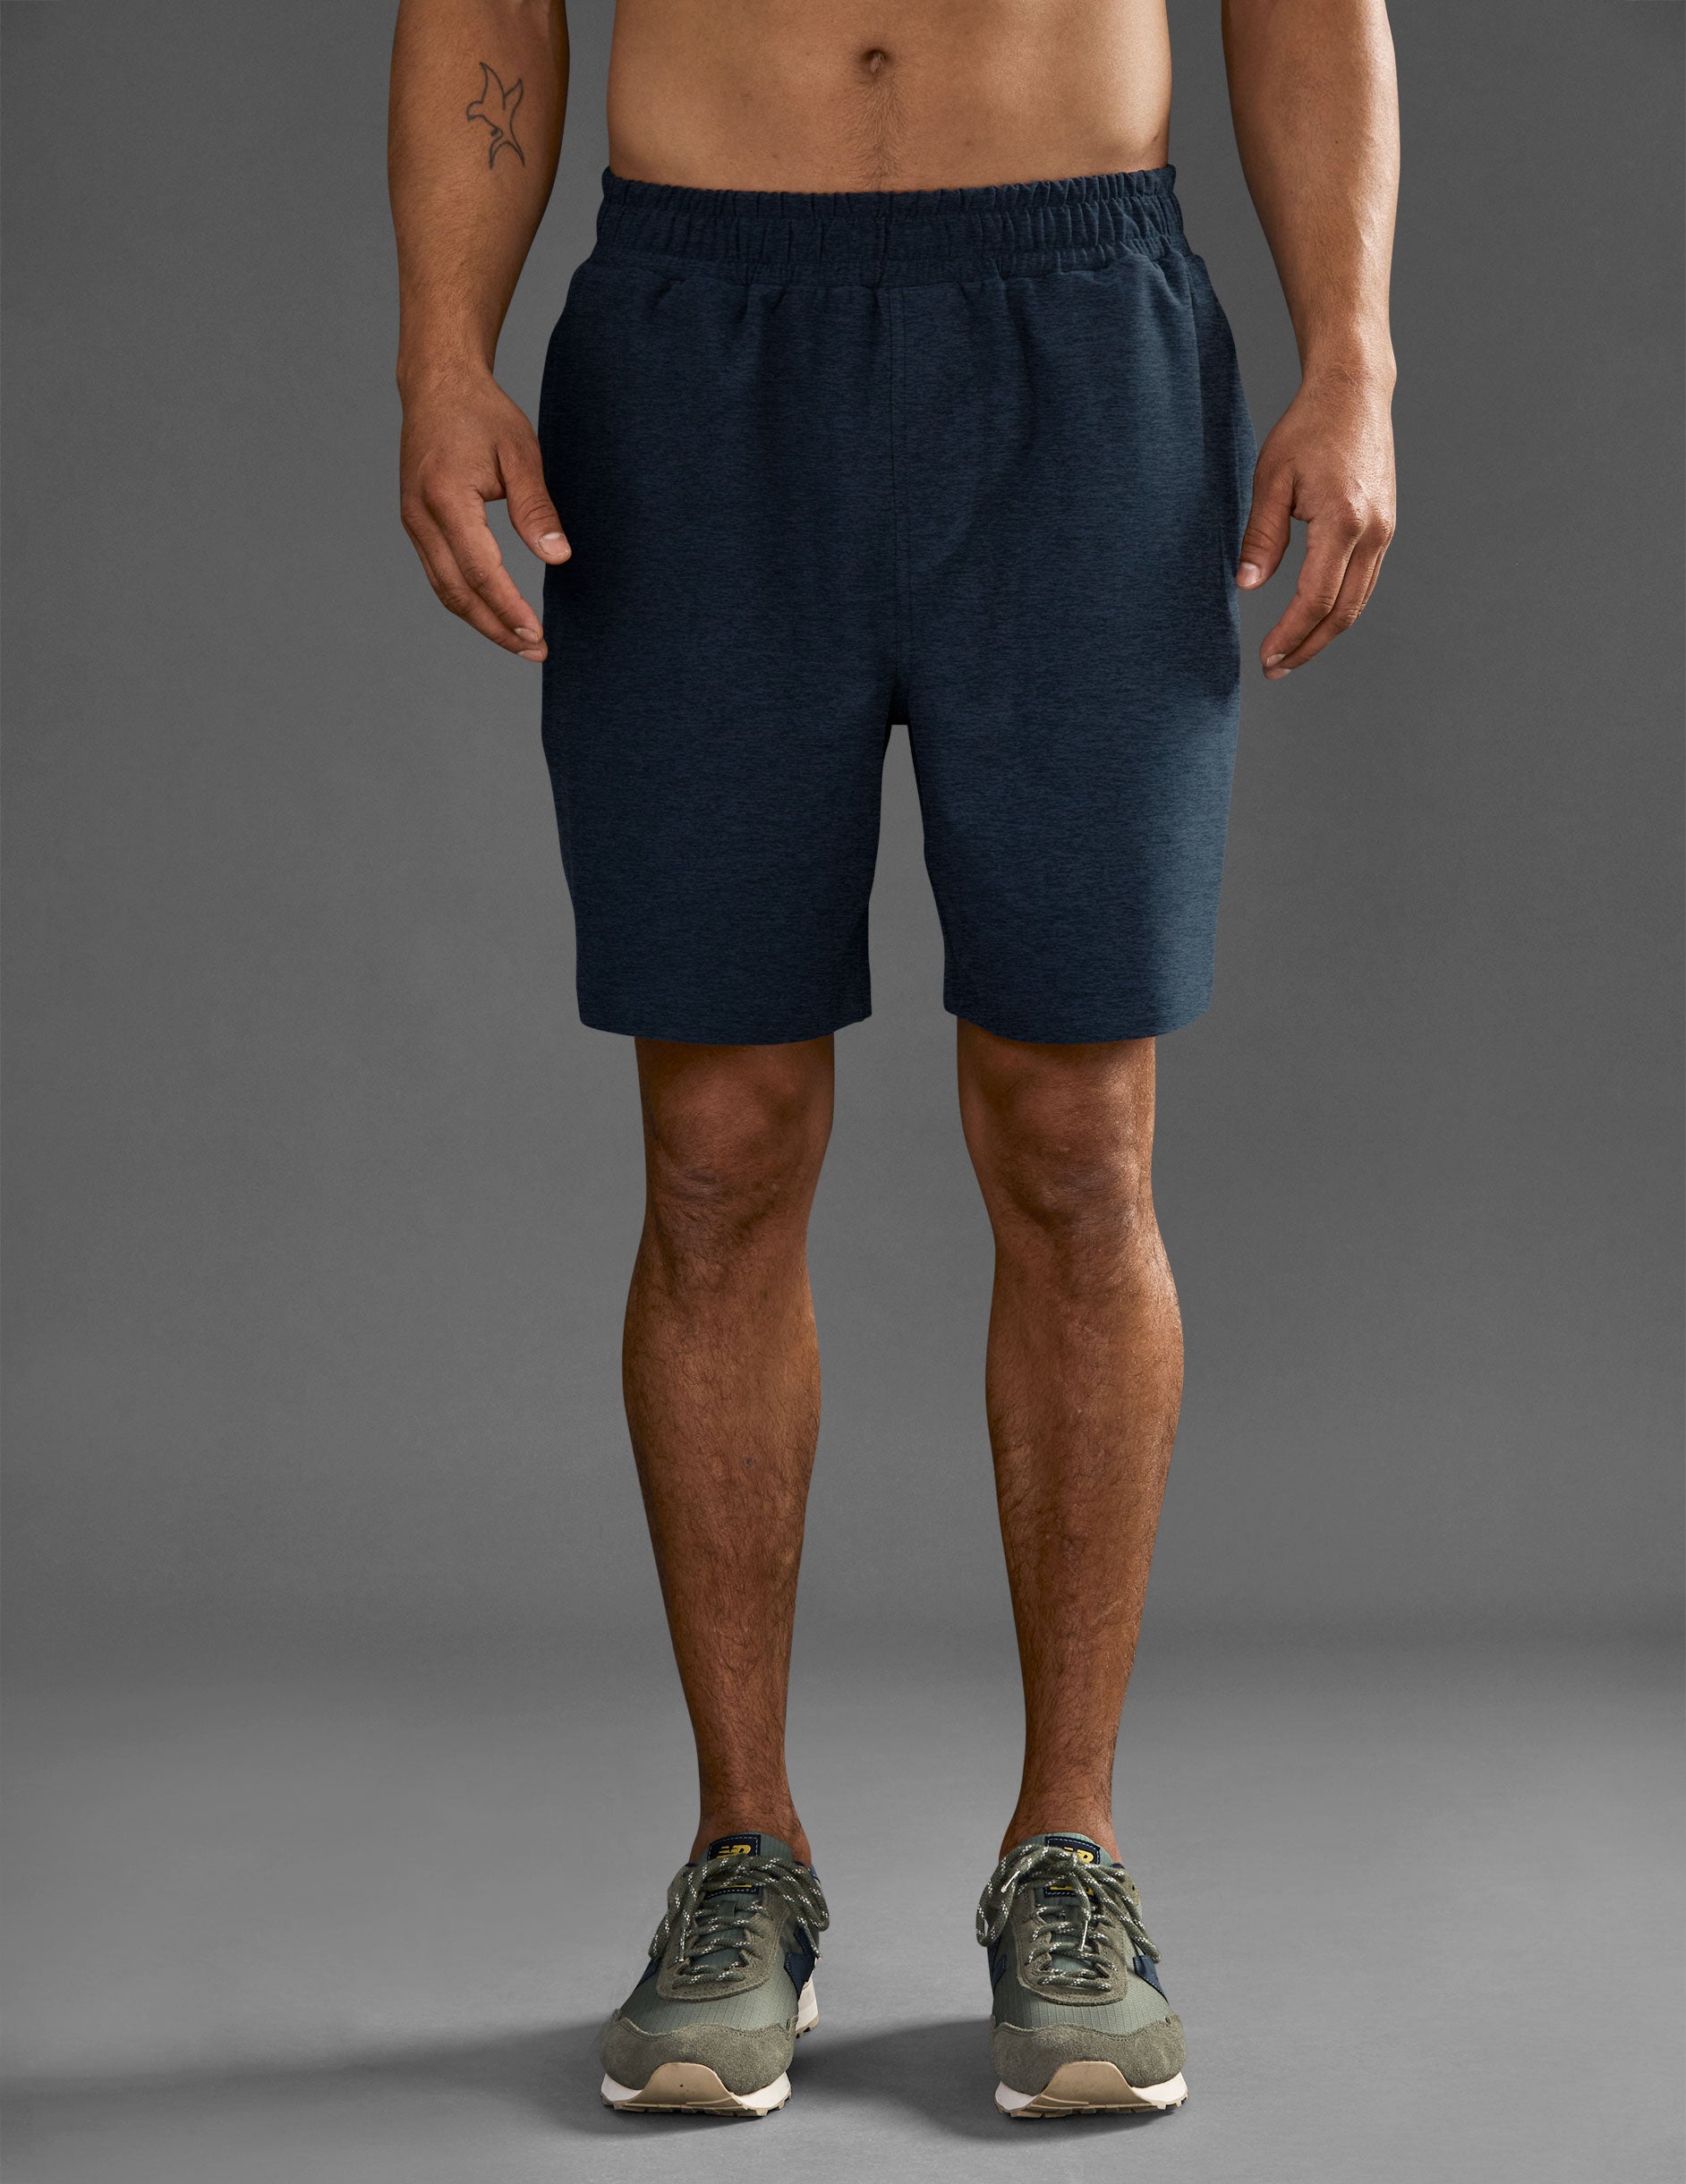 Speed up shorts sizing help, too small? : r/lululemon